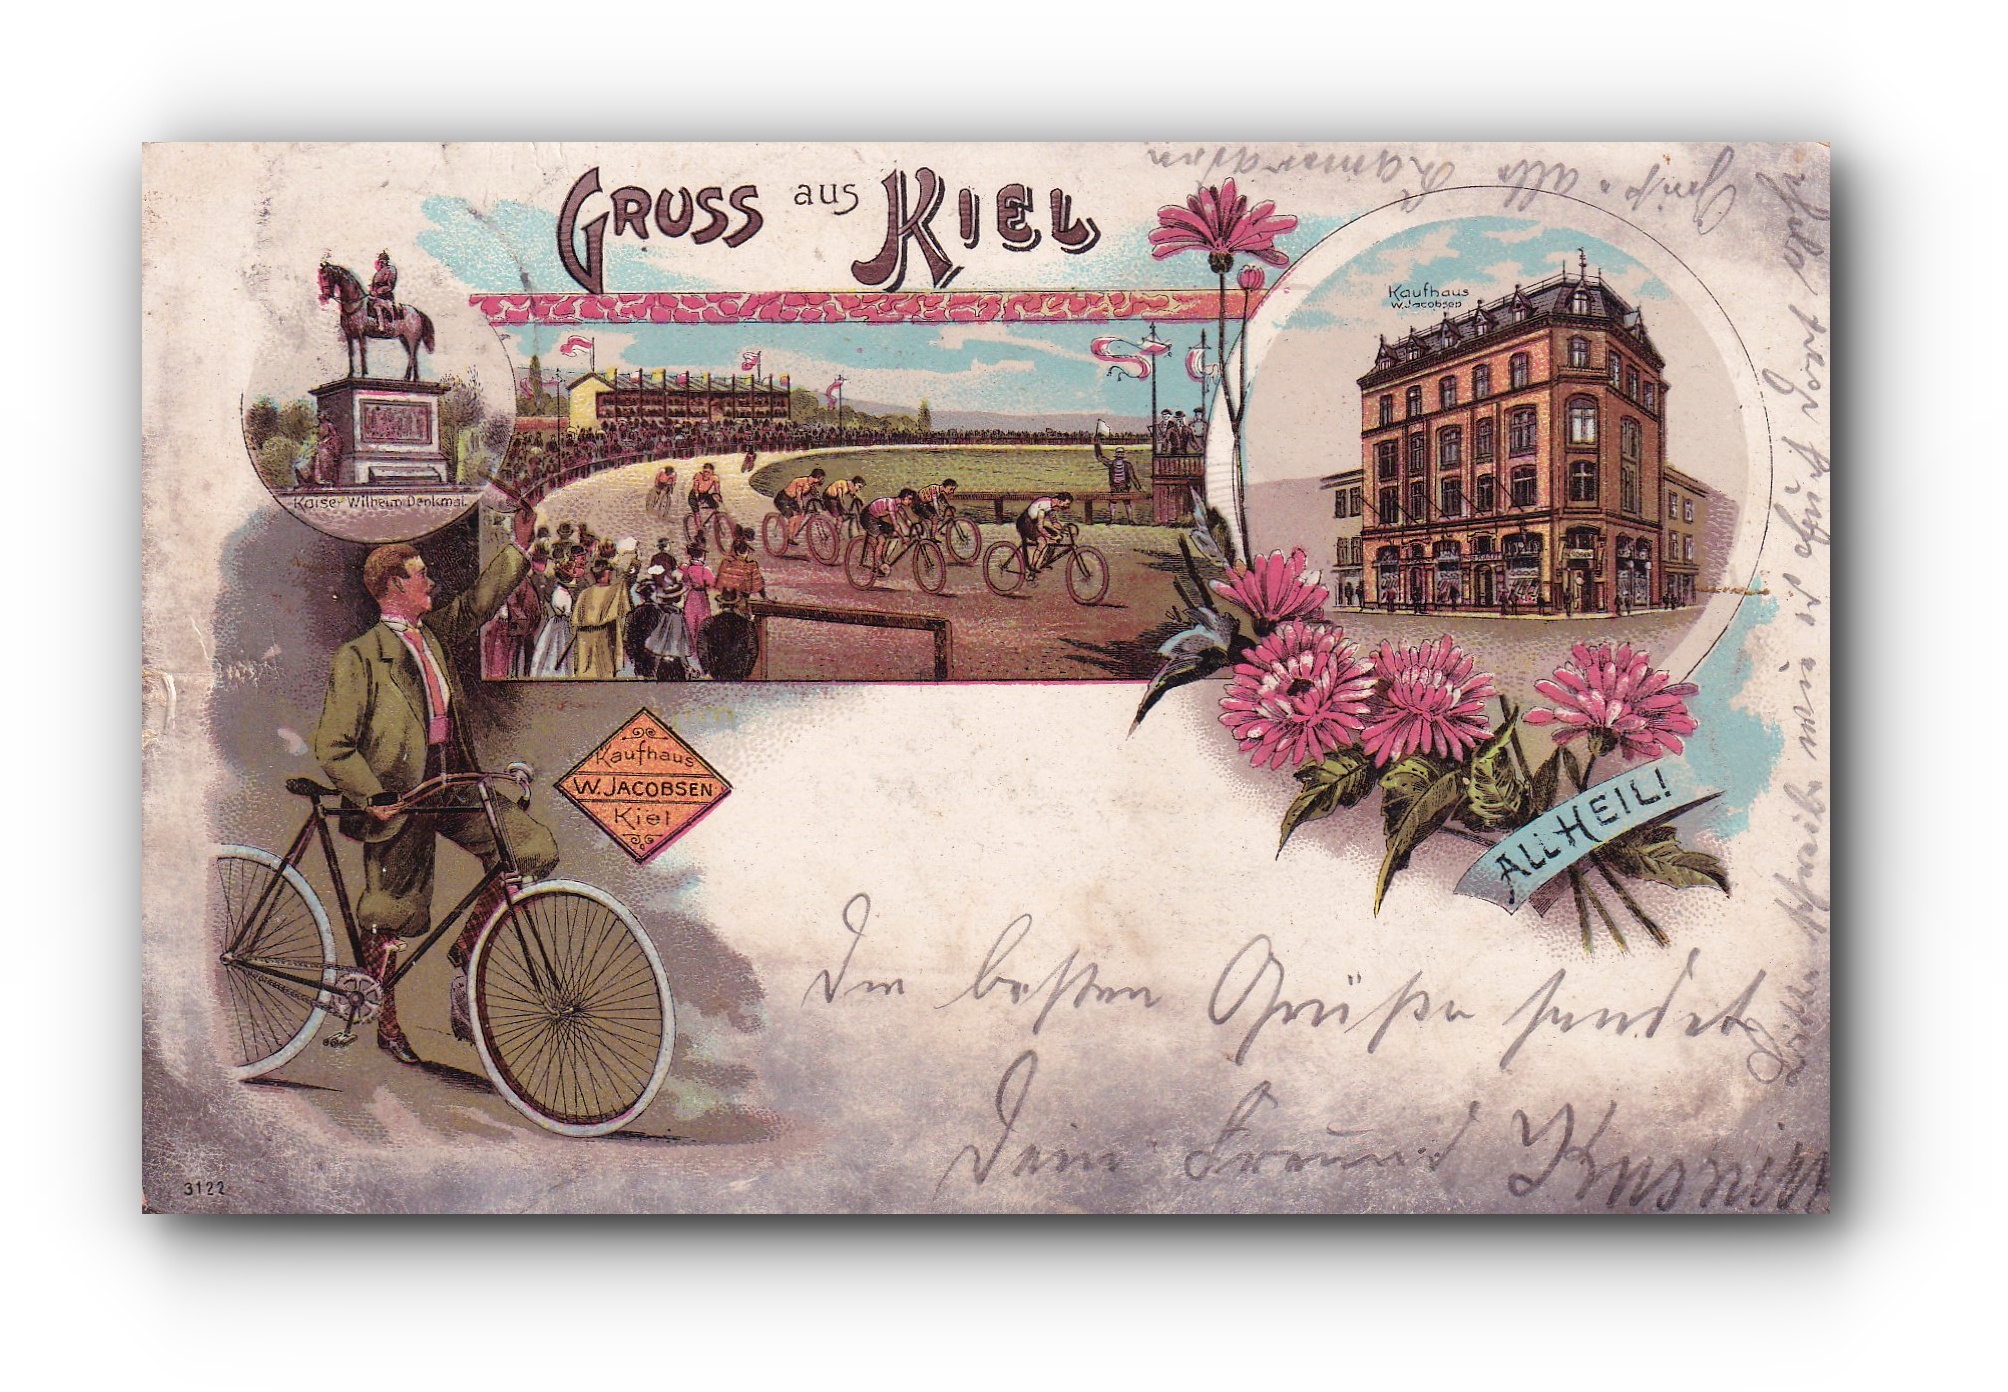 Gruss aus KIEL - 09.07.1899 - Salutations de Kiel - Greetings from Kiel